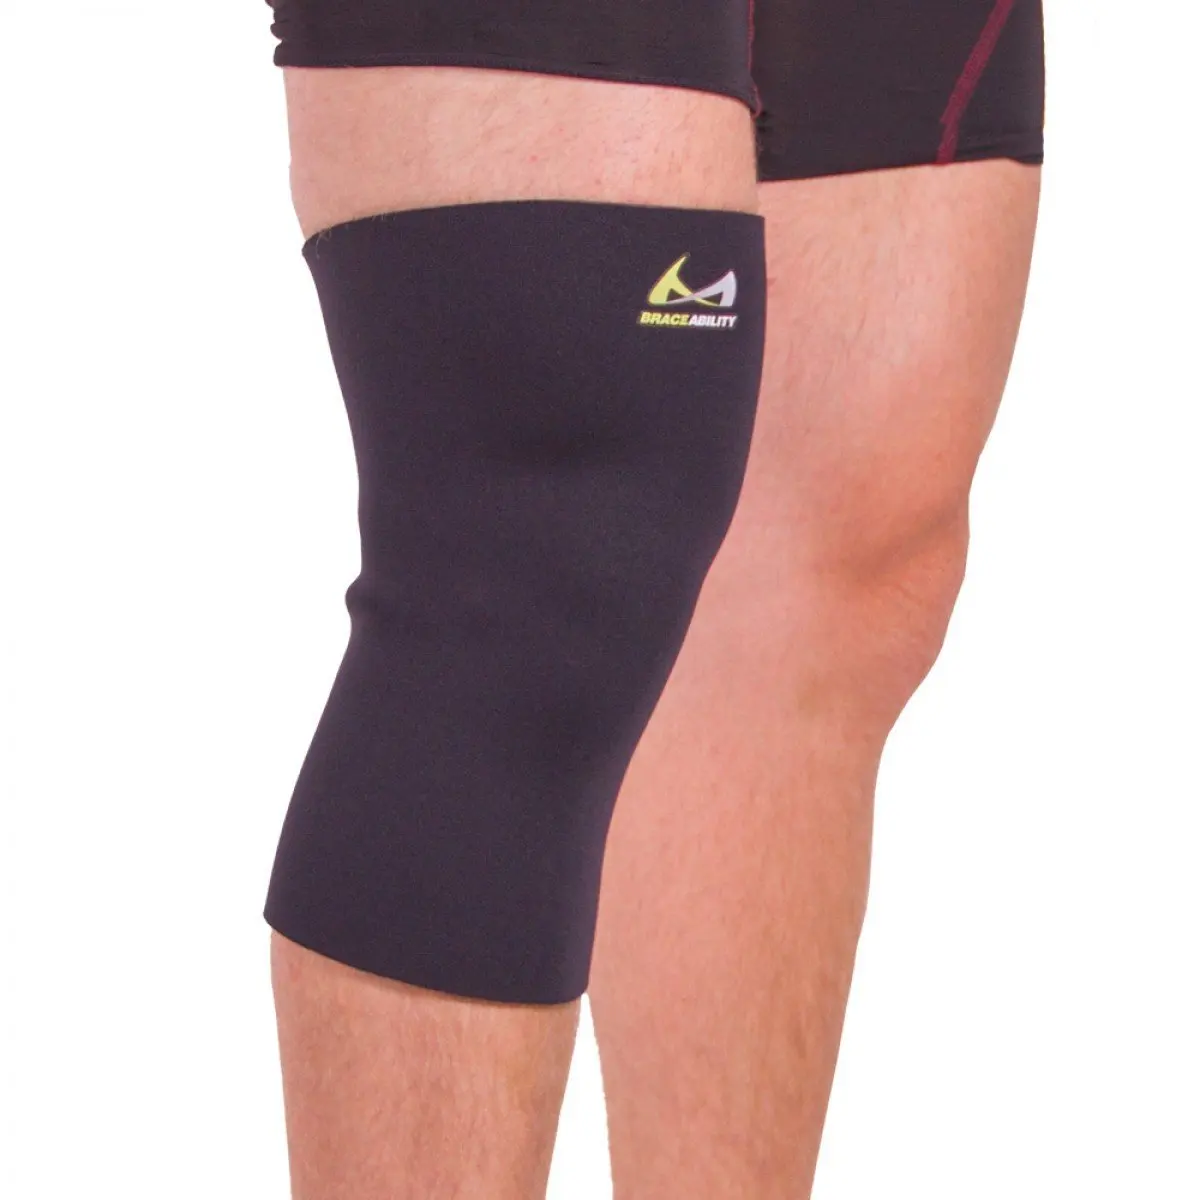 compression knee sleeve